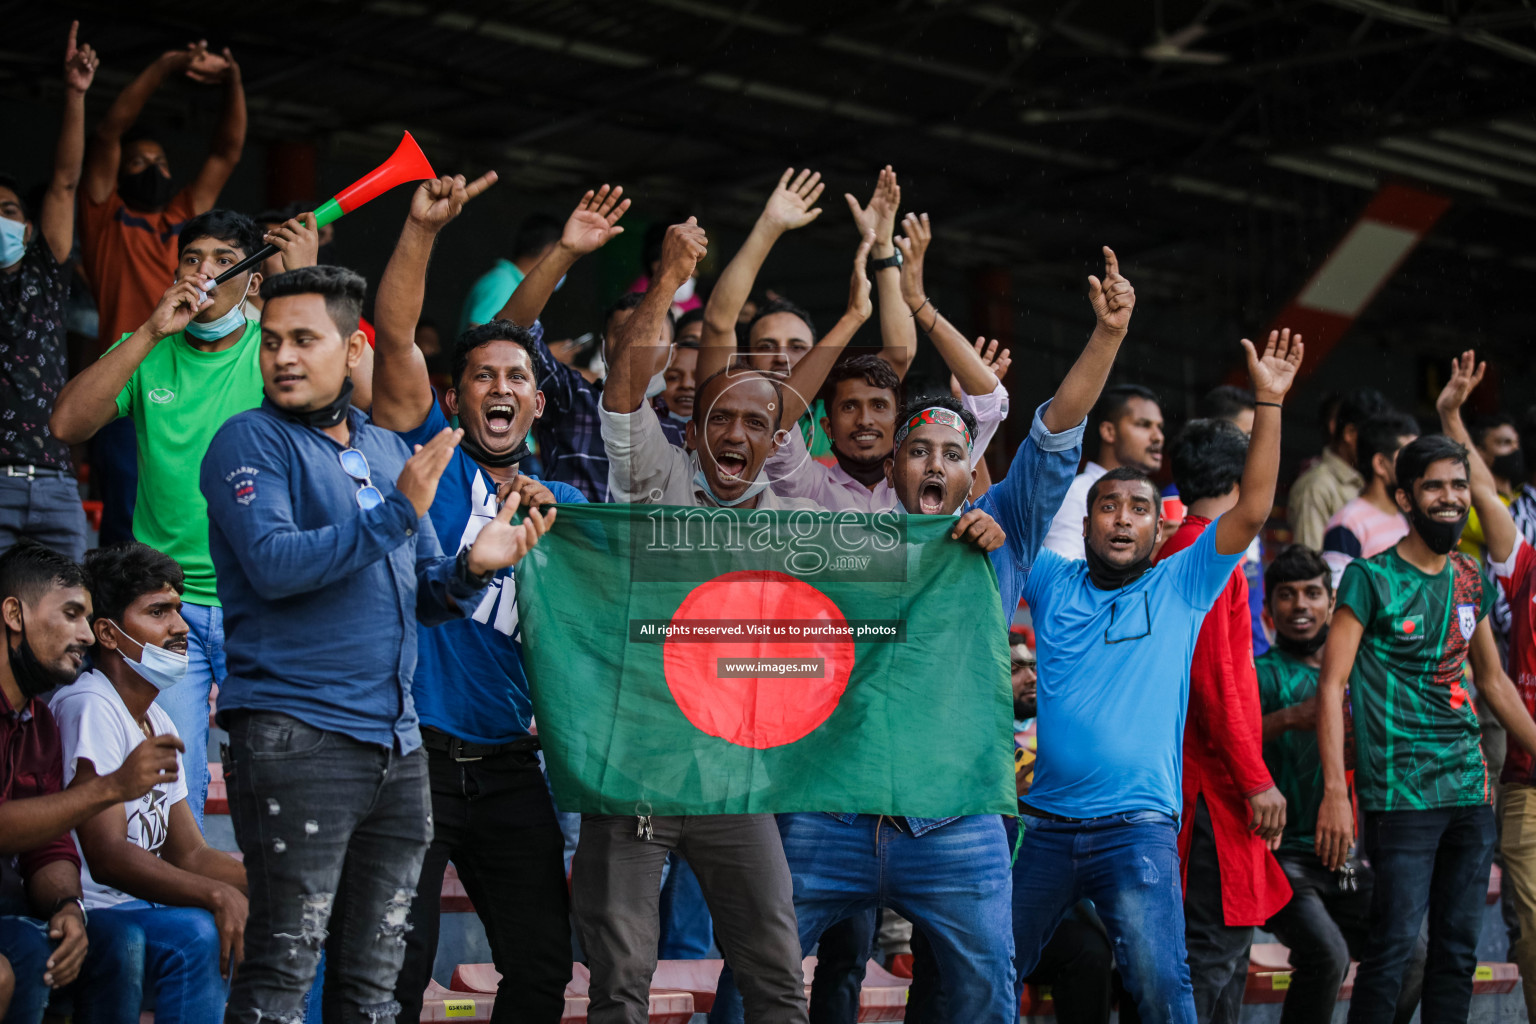 Bangladesh vs Sri Lanka in SAFF Championship 2021 held on 1st October 2021 in Galolhu National Stadium, Male', Maldives